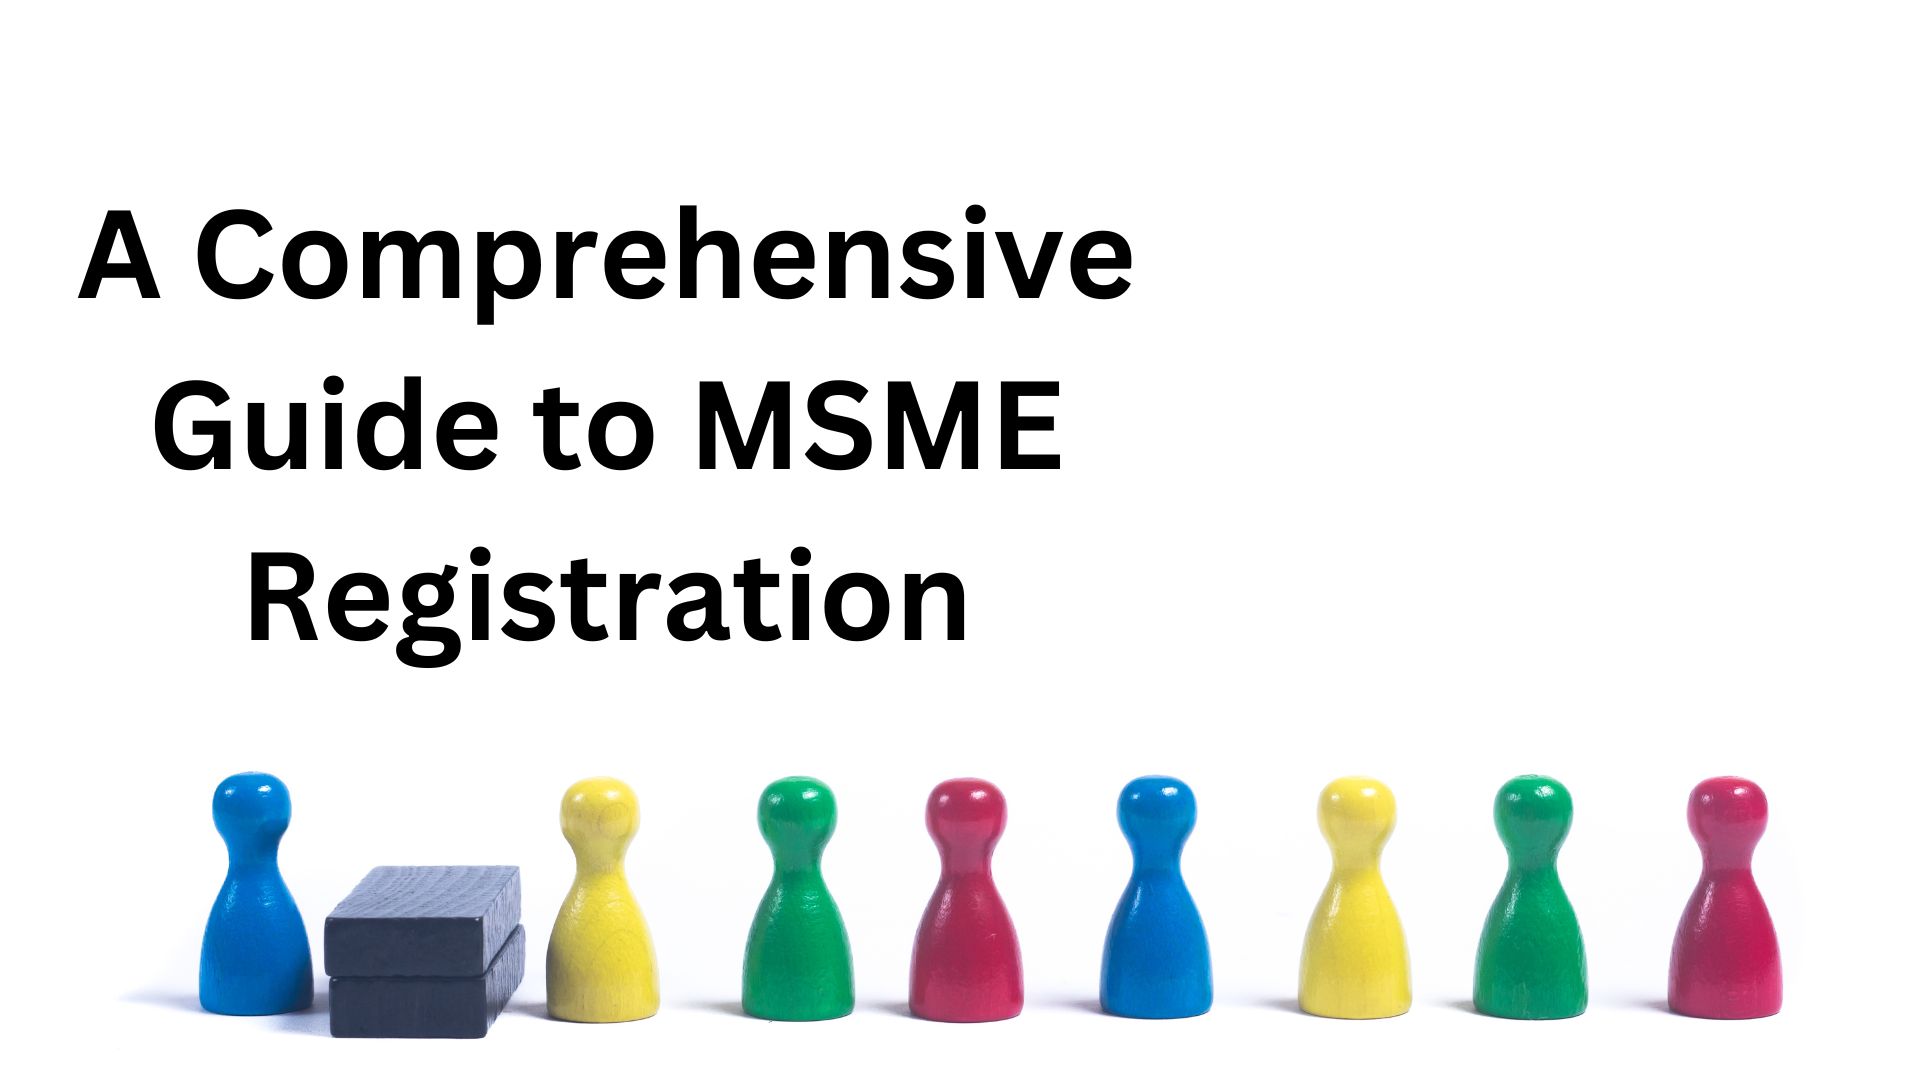 A Comprehensive Guide to MSME Registration